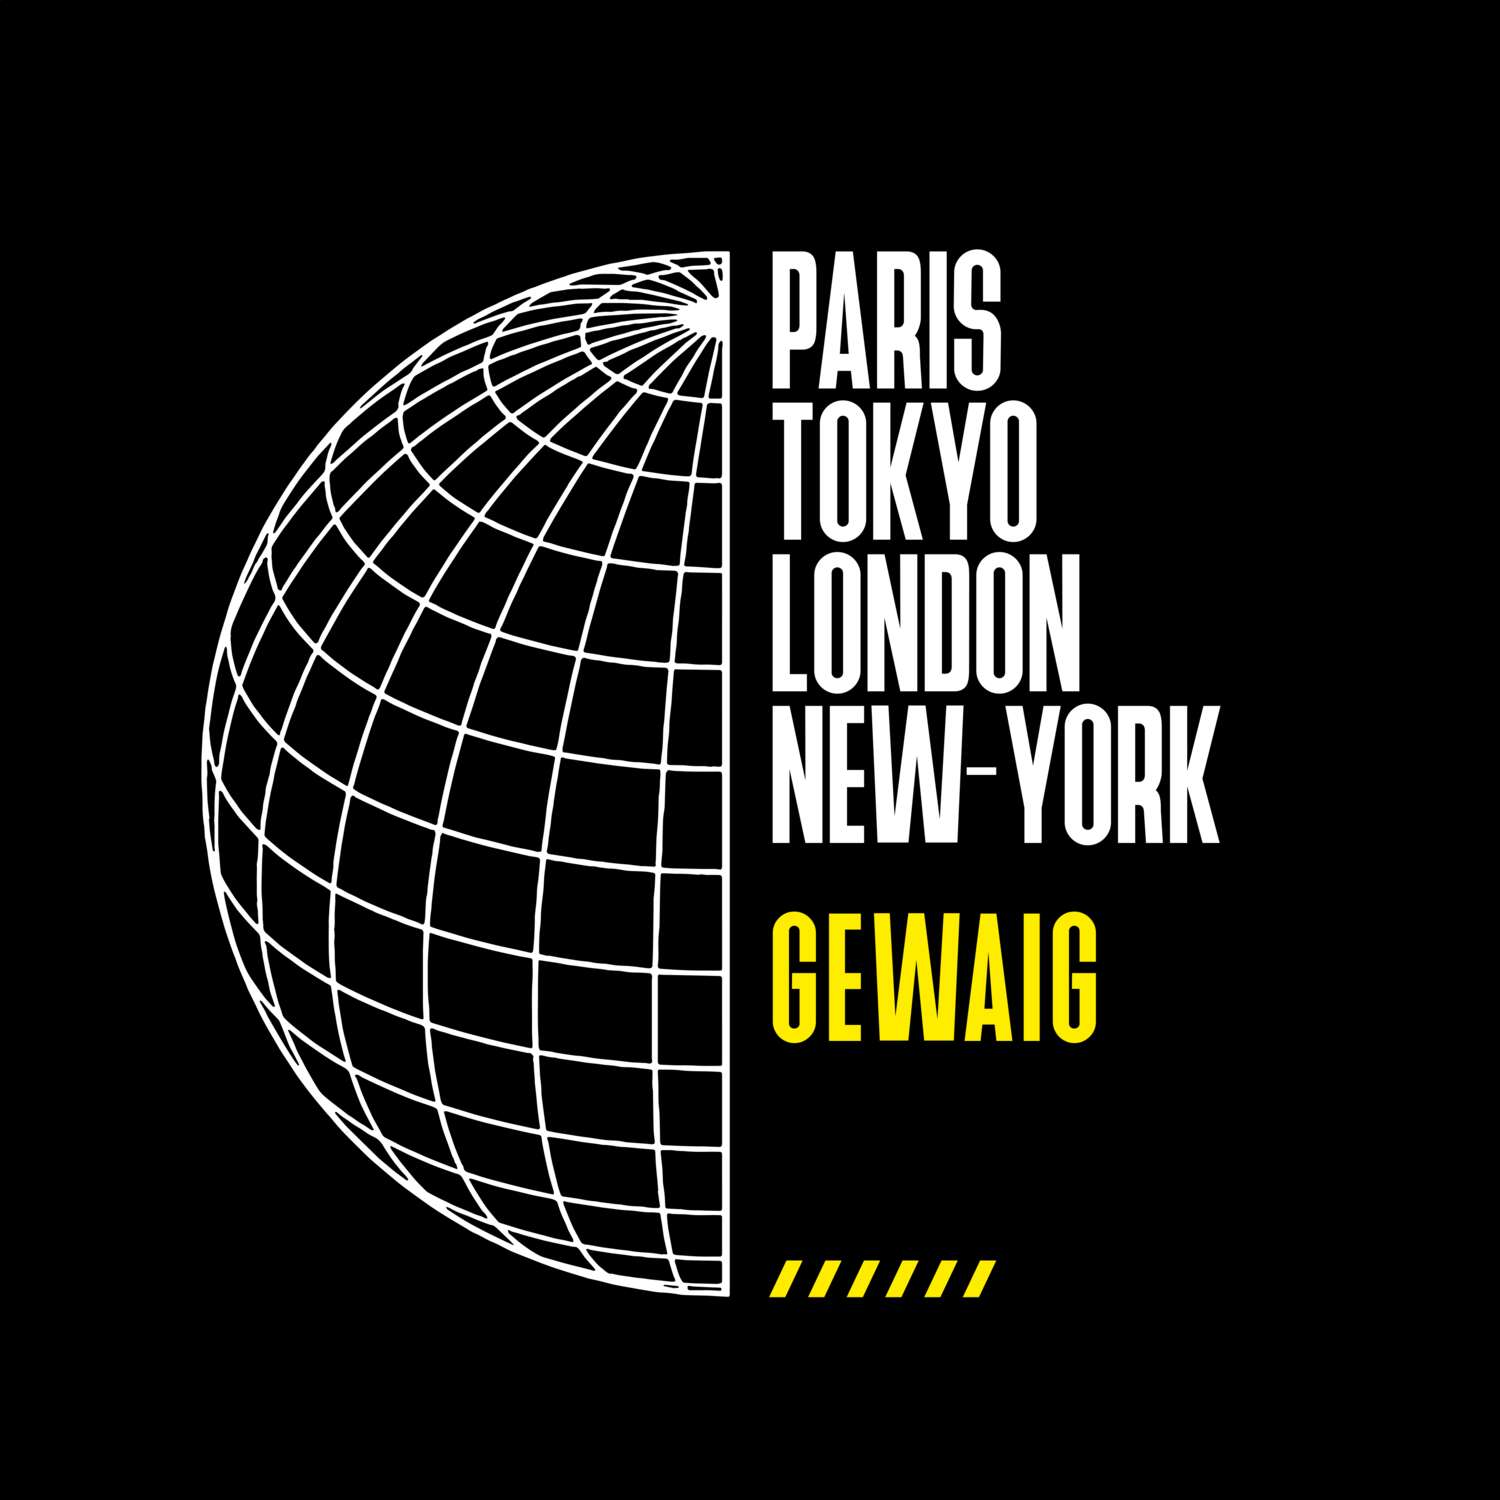 Gewaig T-Shirt »Paris Tokyo London«